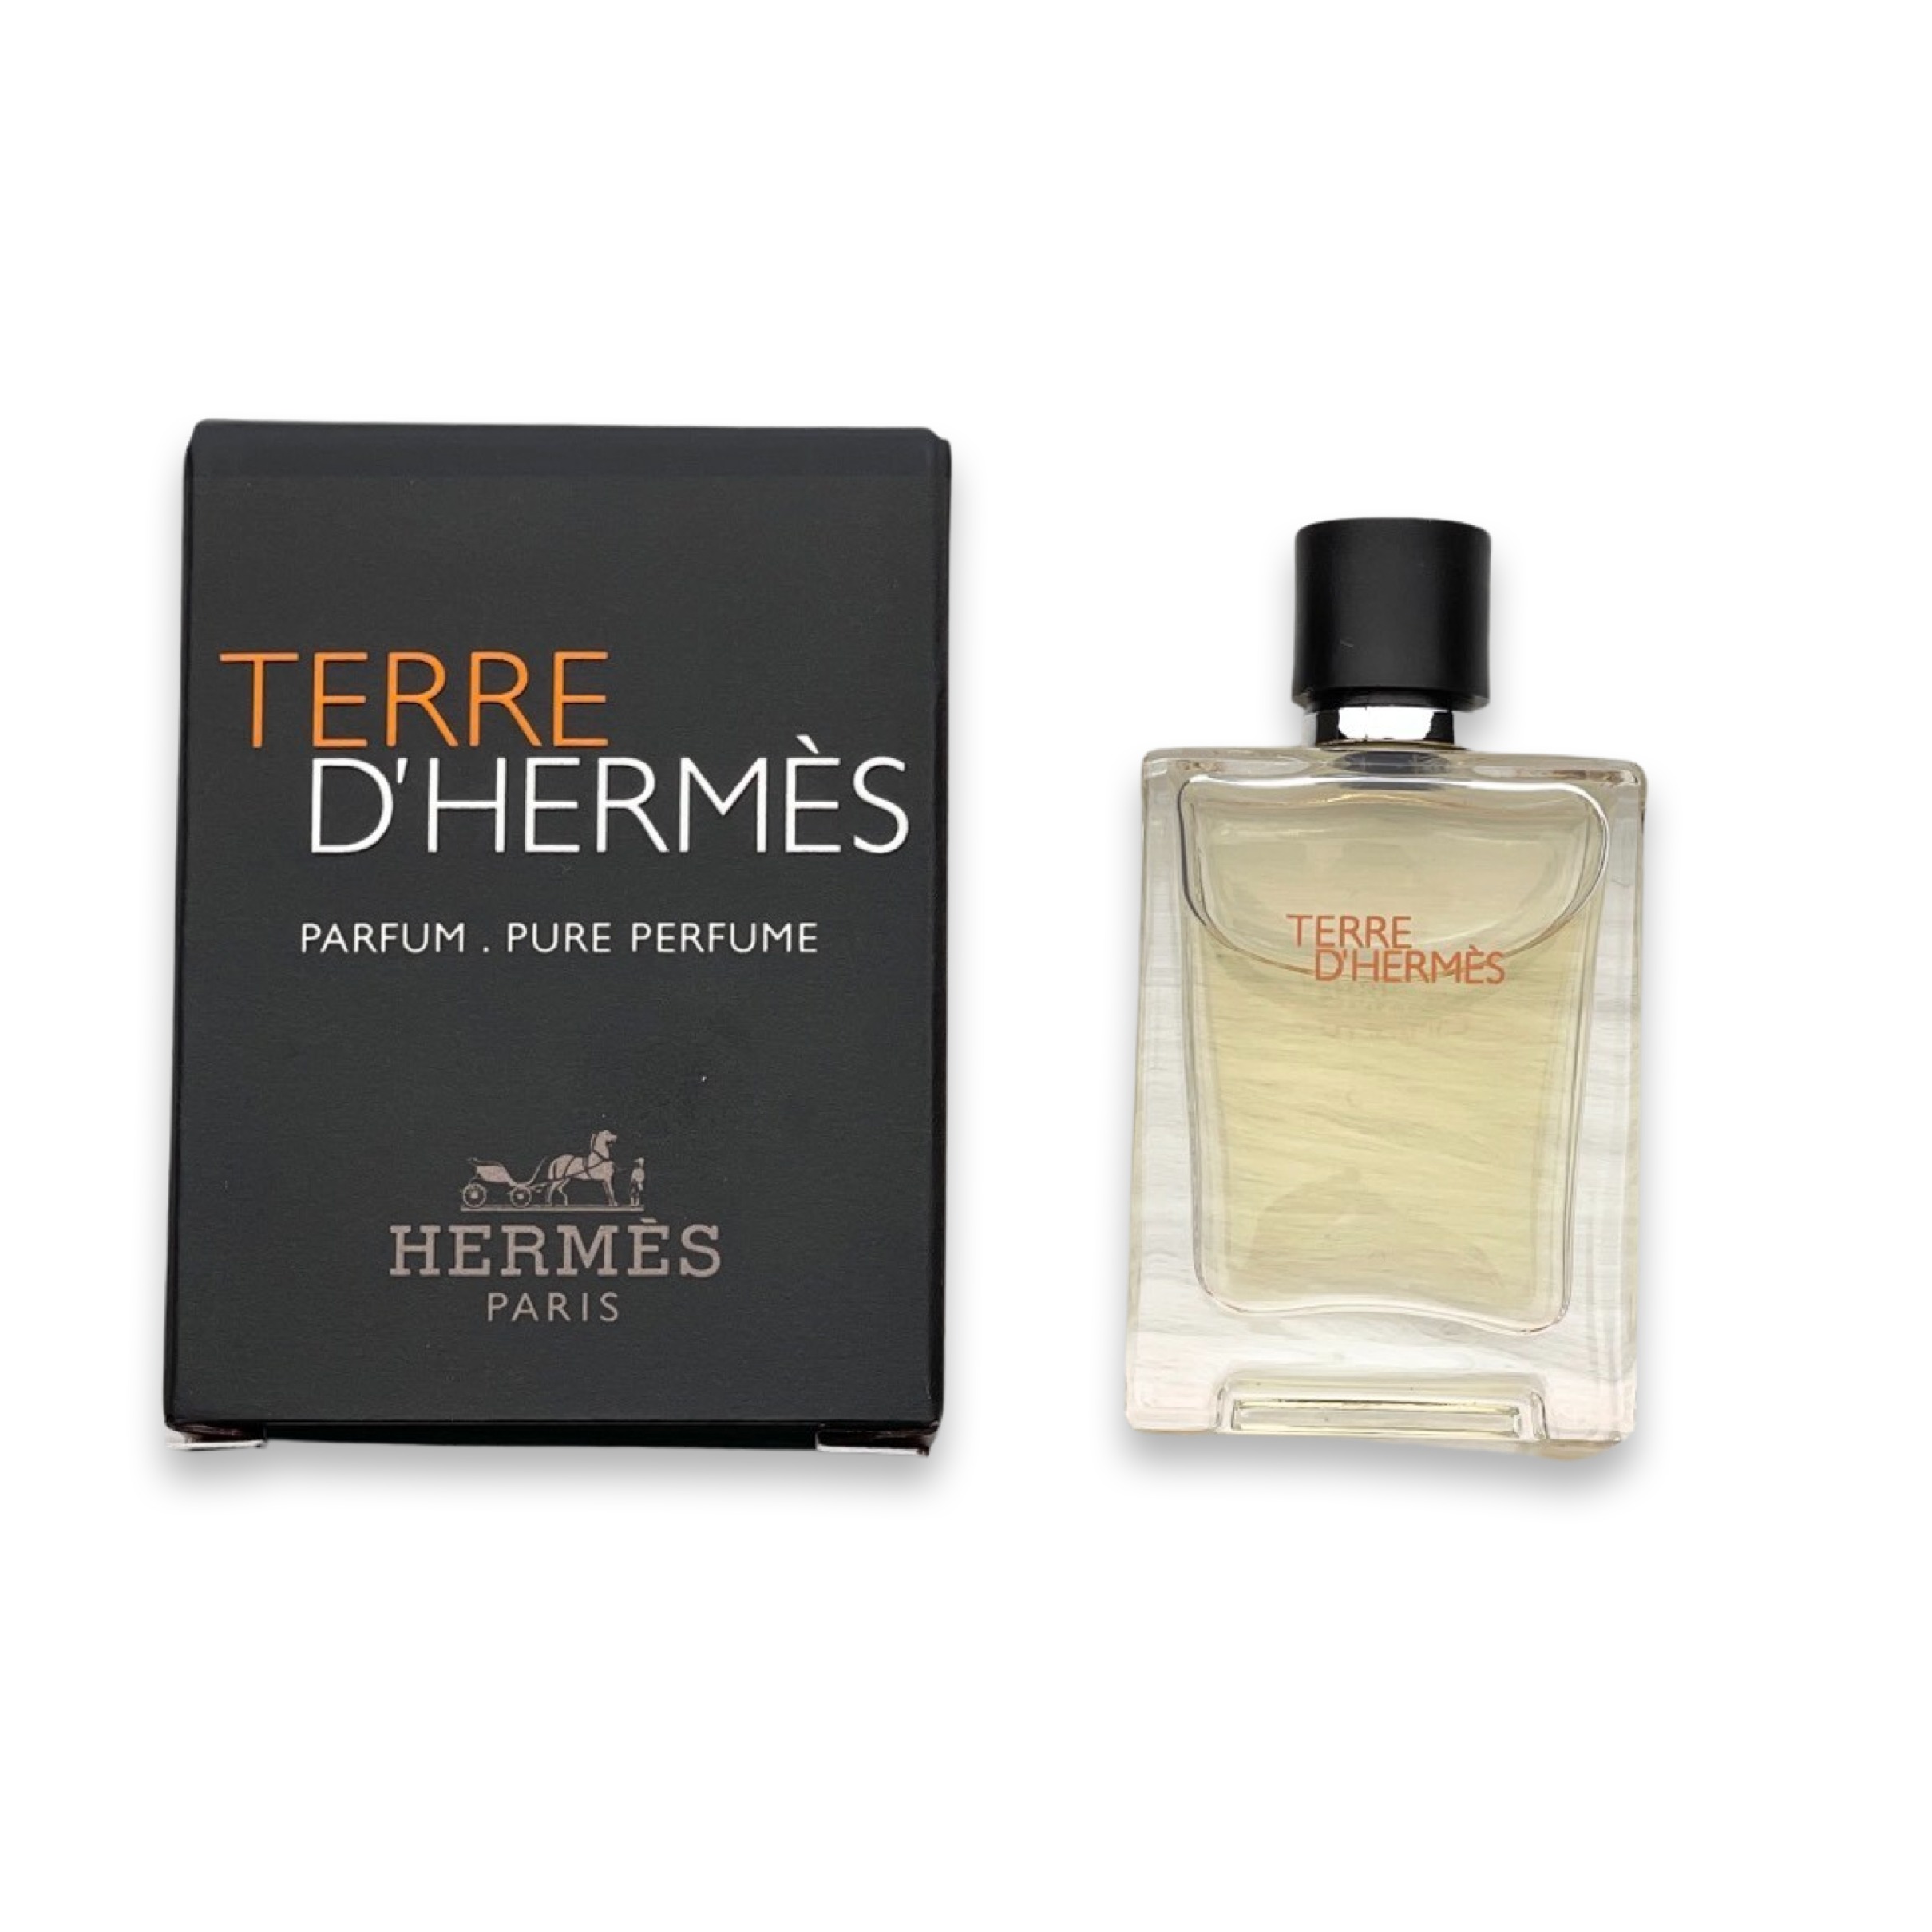 Terre D'hermes Parfum / Travel Size (12.5ml)